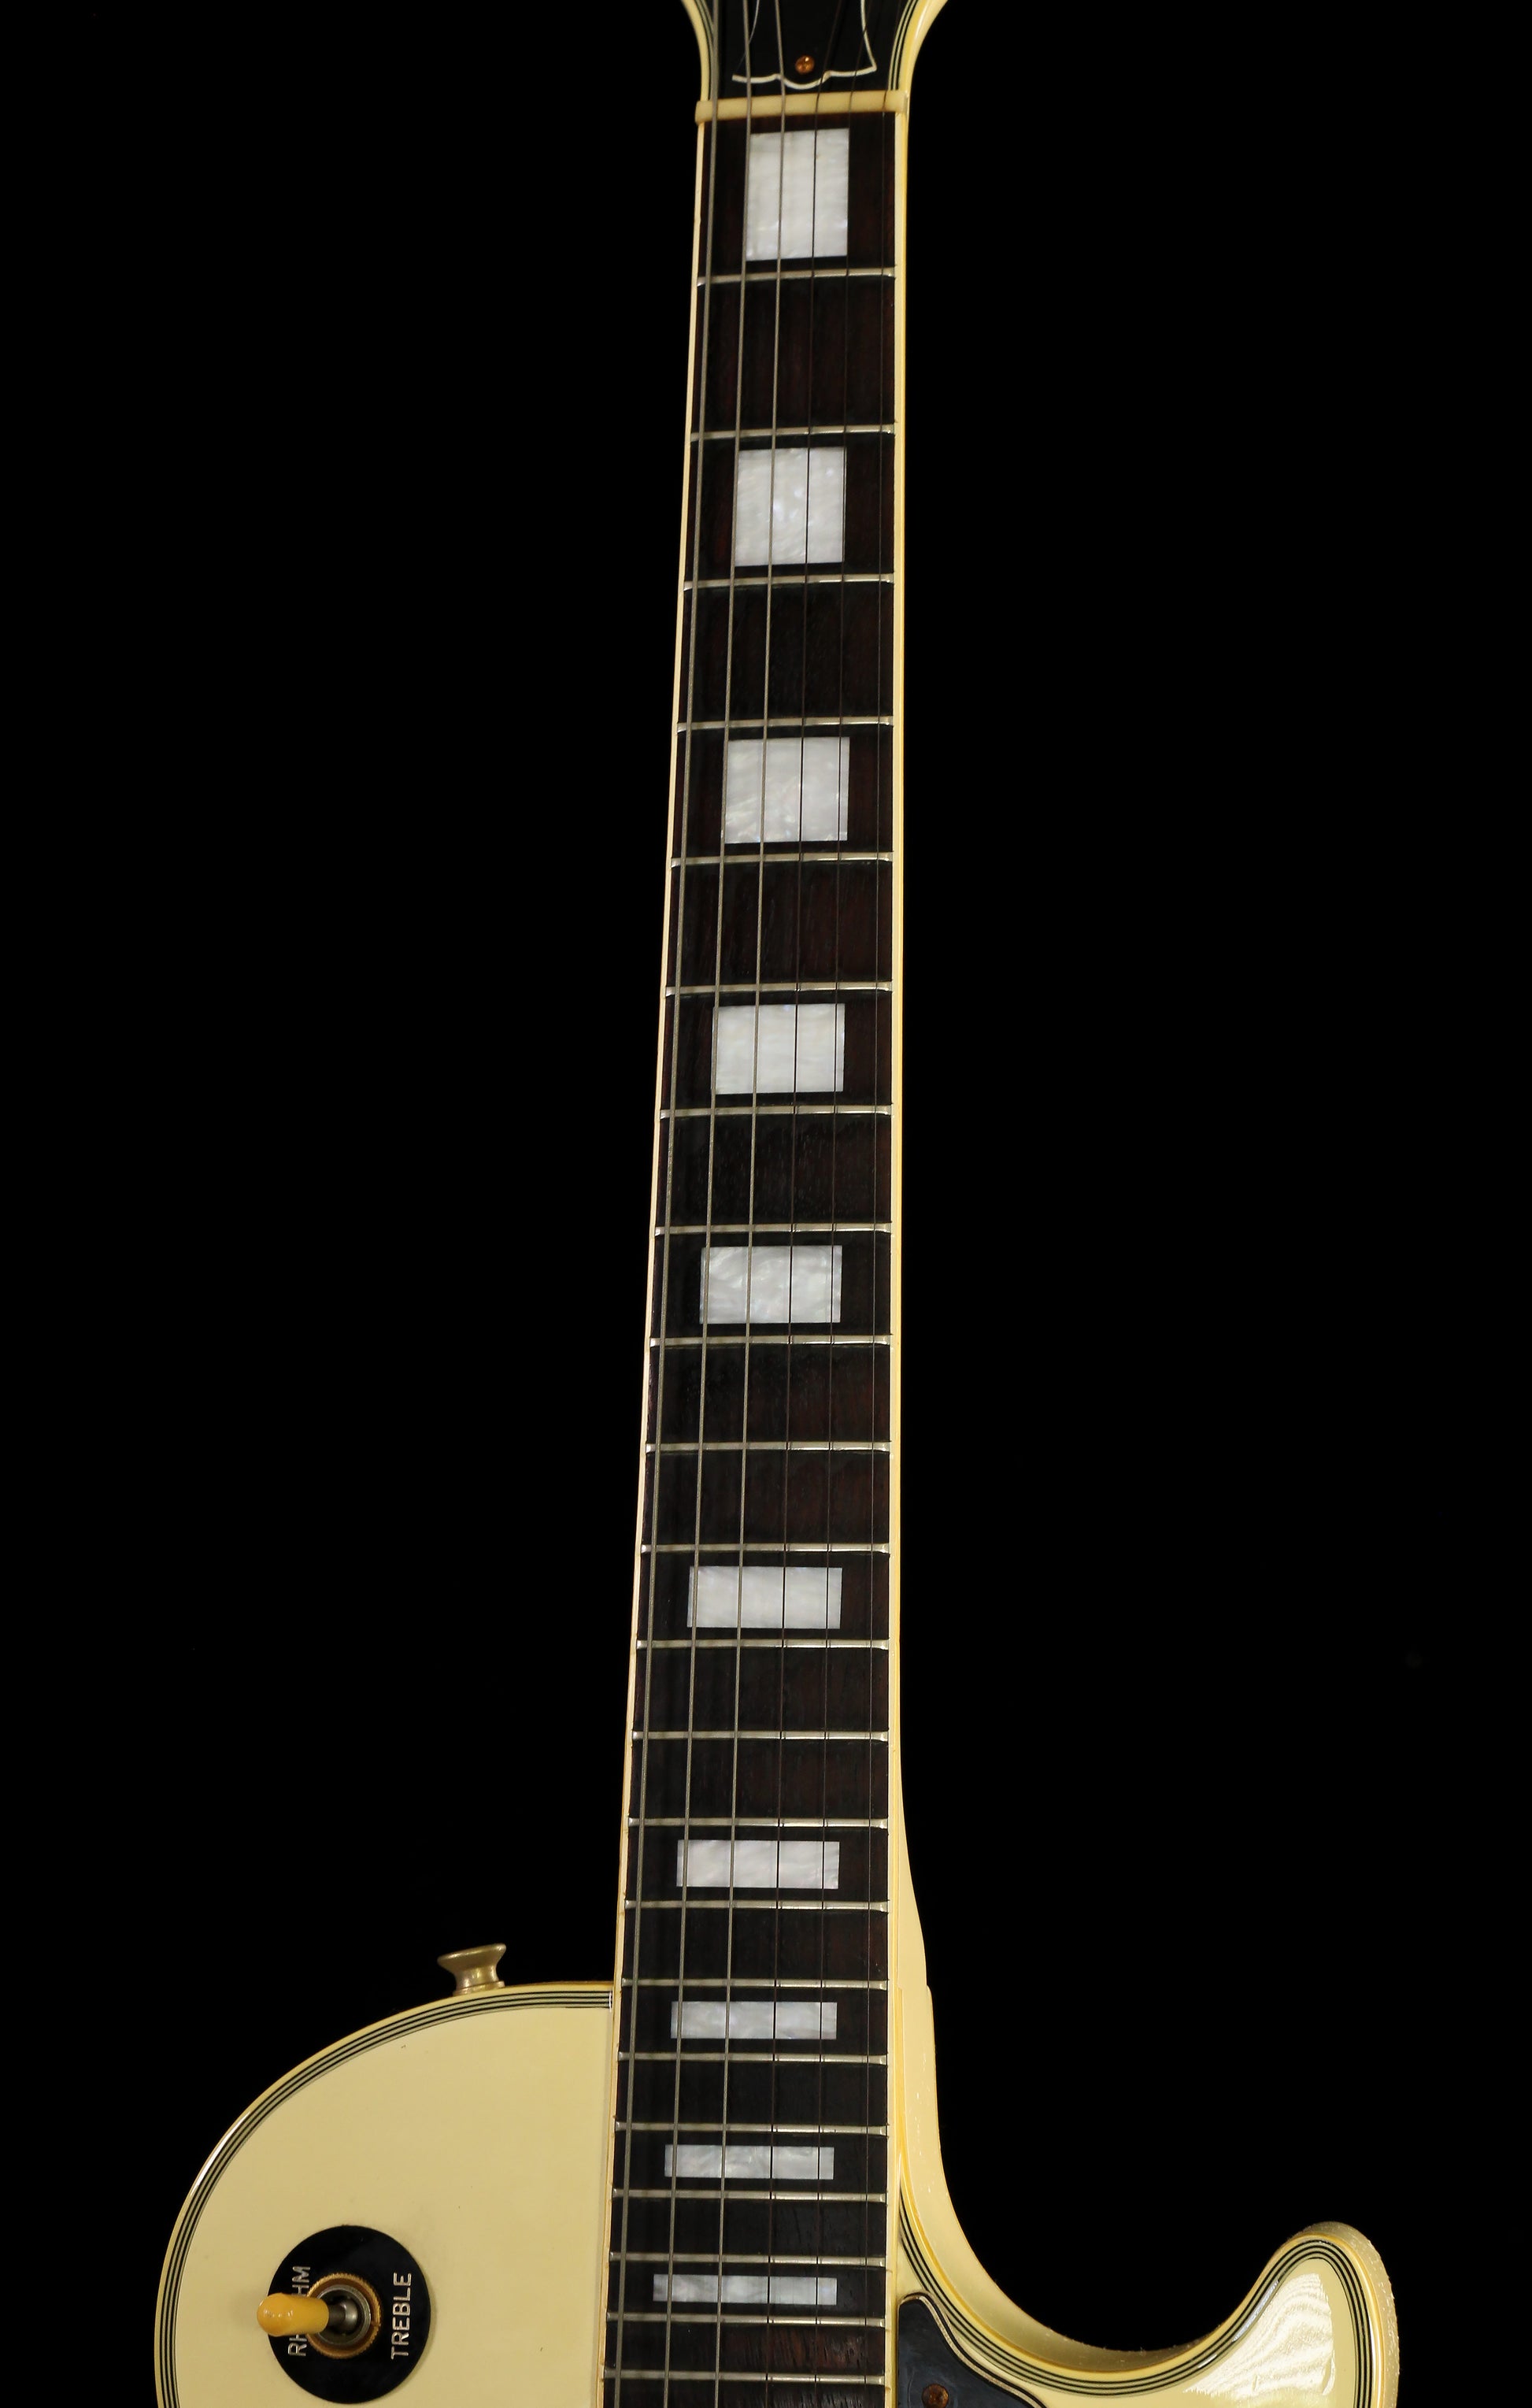 Burny RLC-70 Les Paul Custom MIJ Antique White